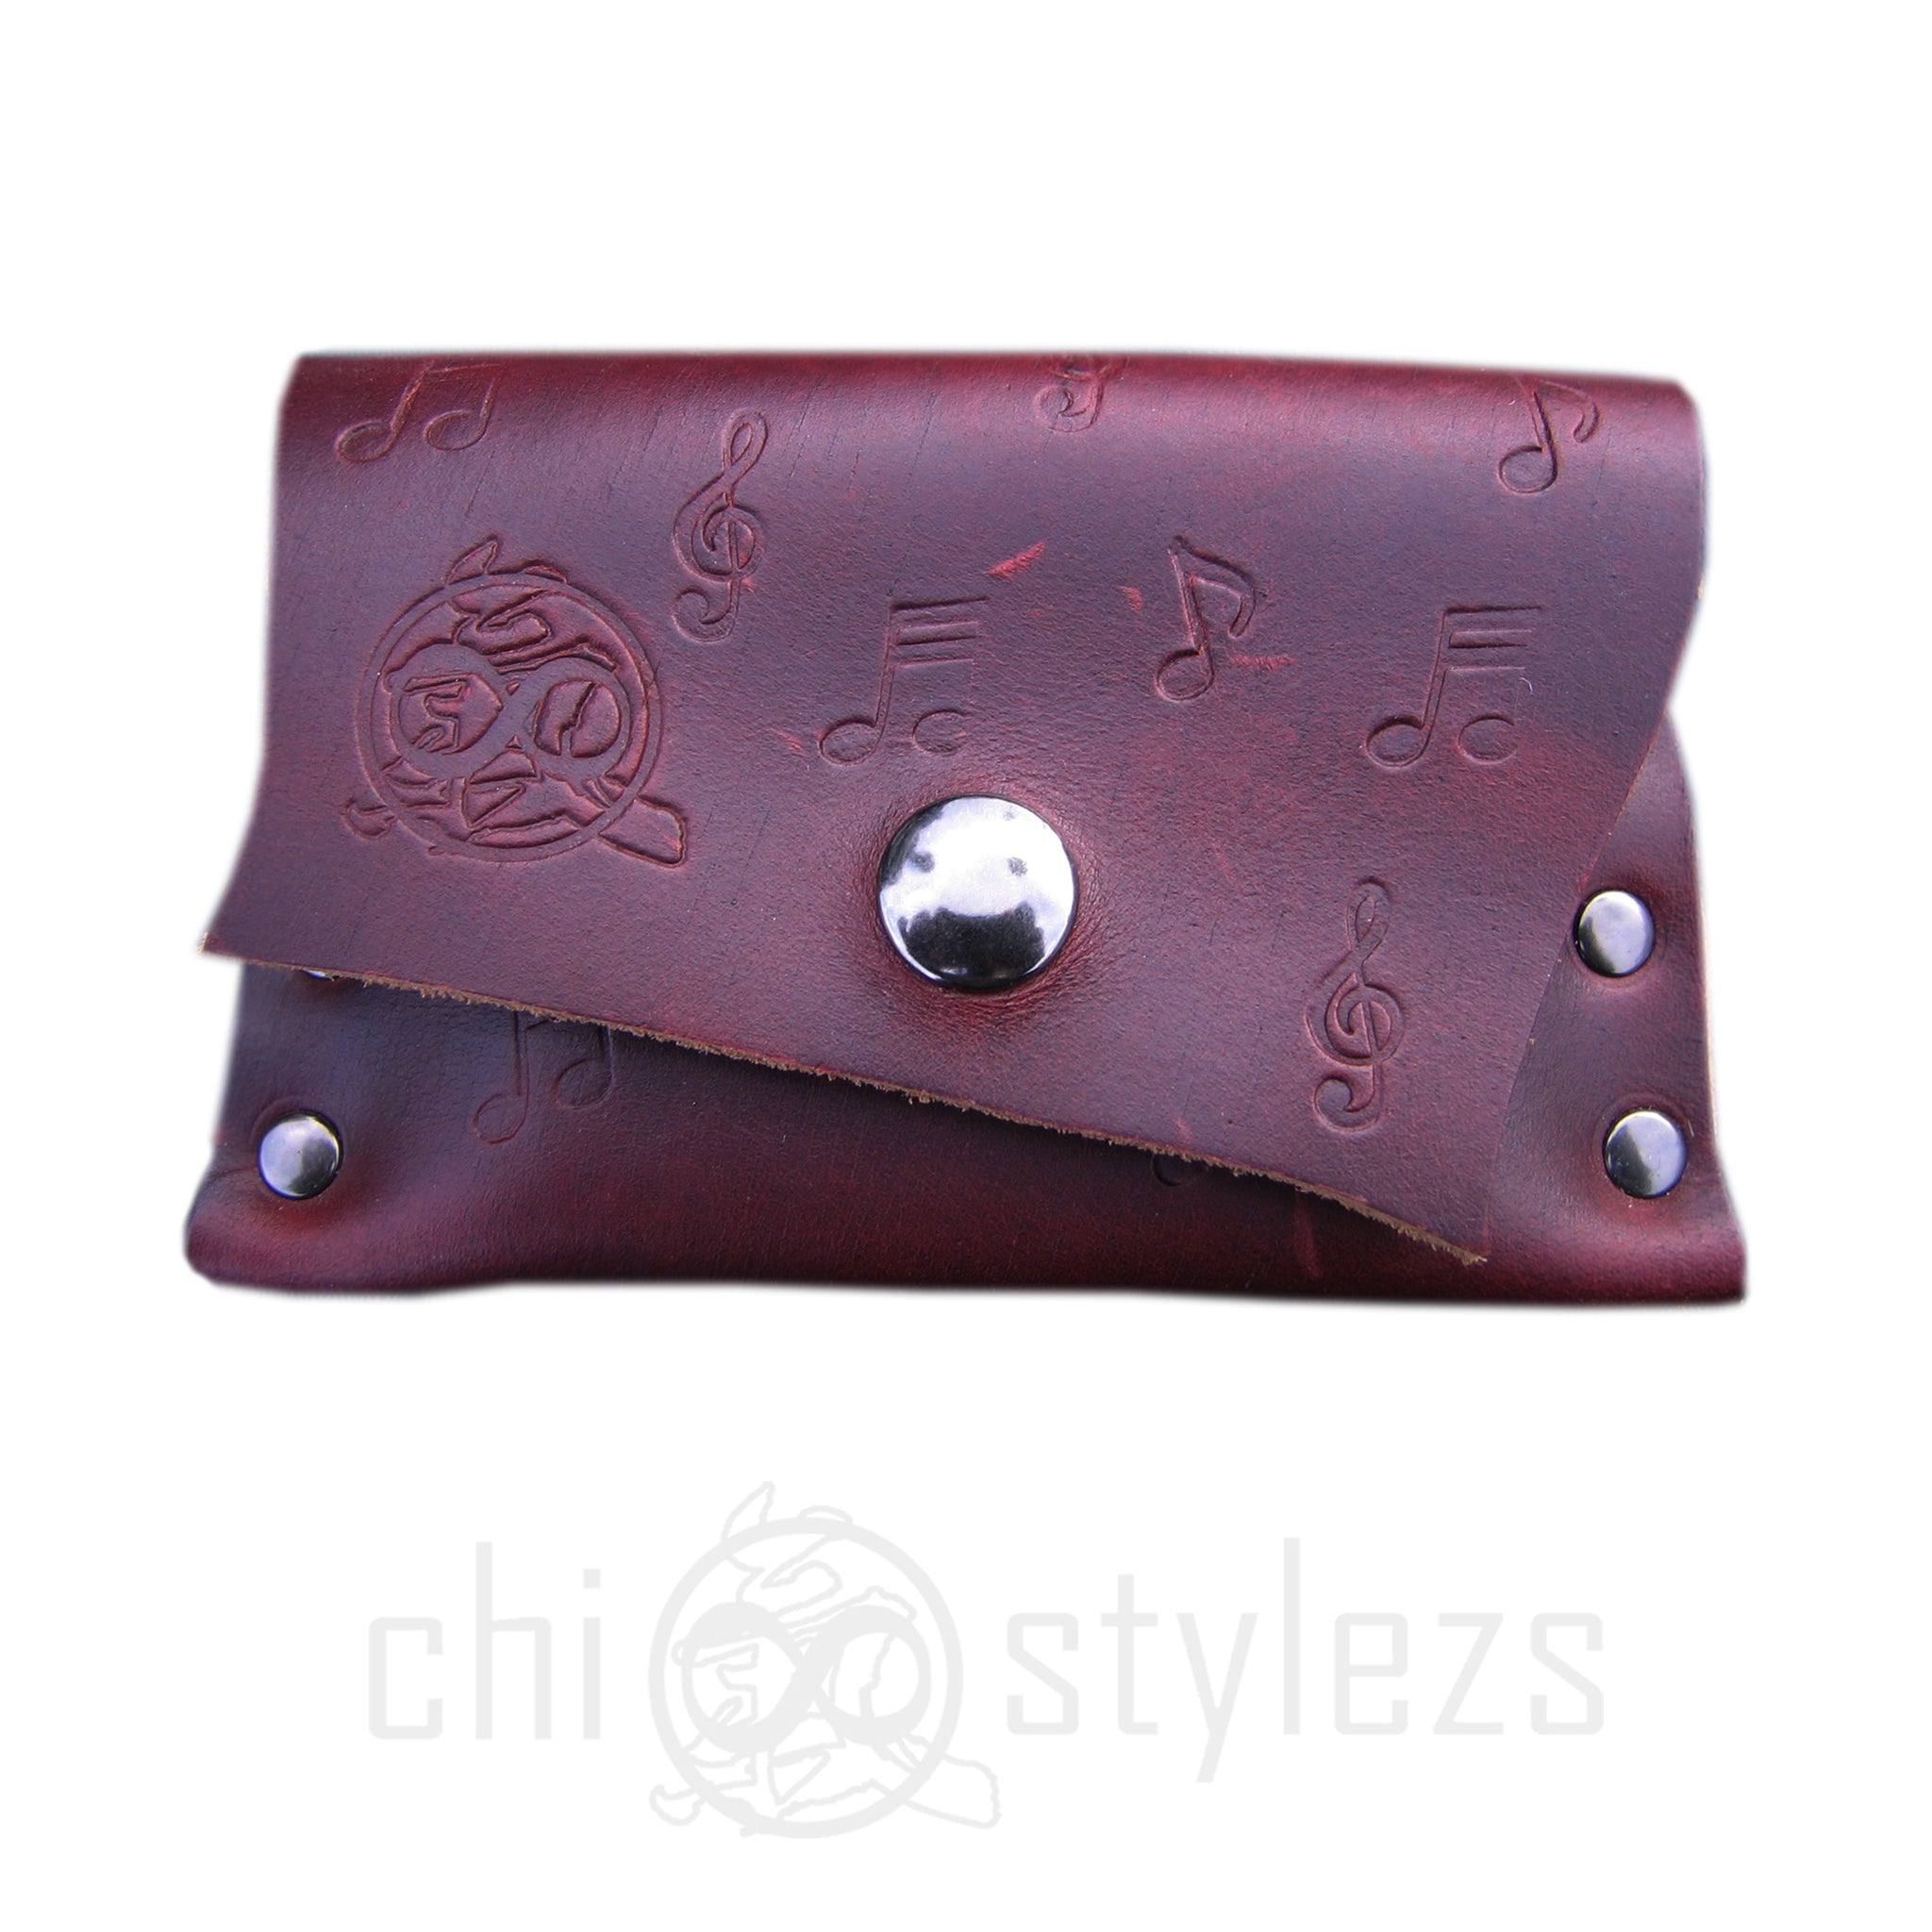 Chi Stash Mini Wallet Classique (Custom Request)